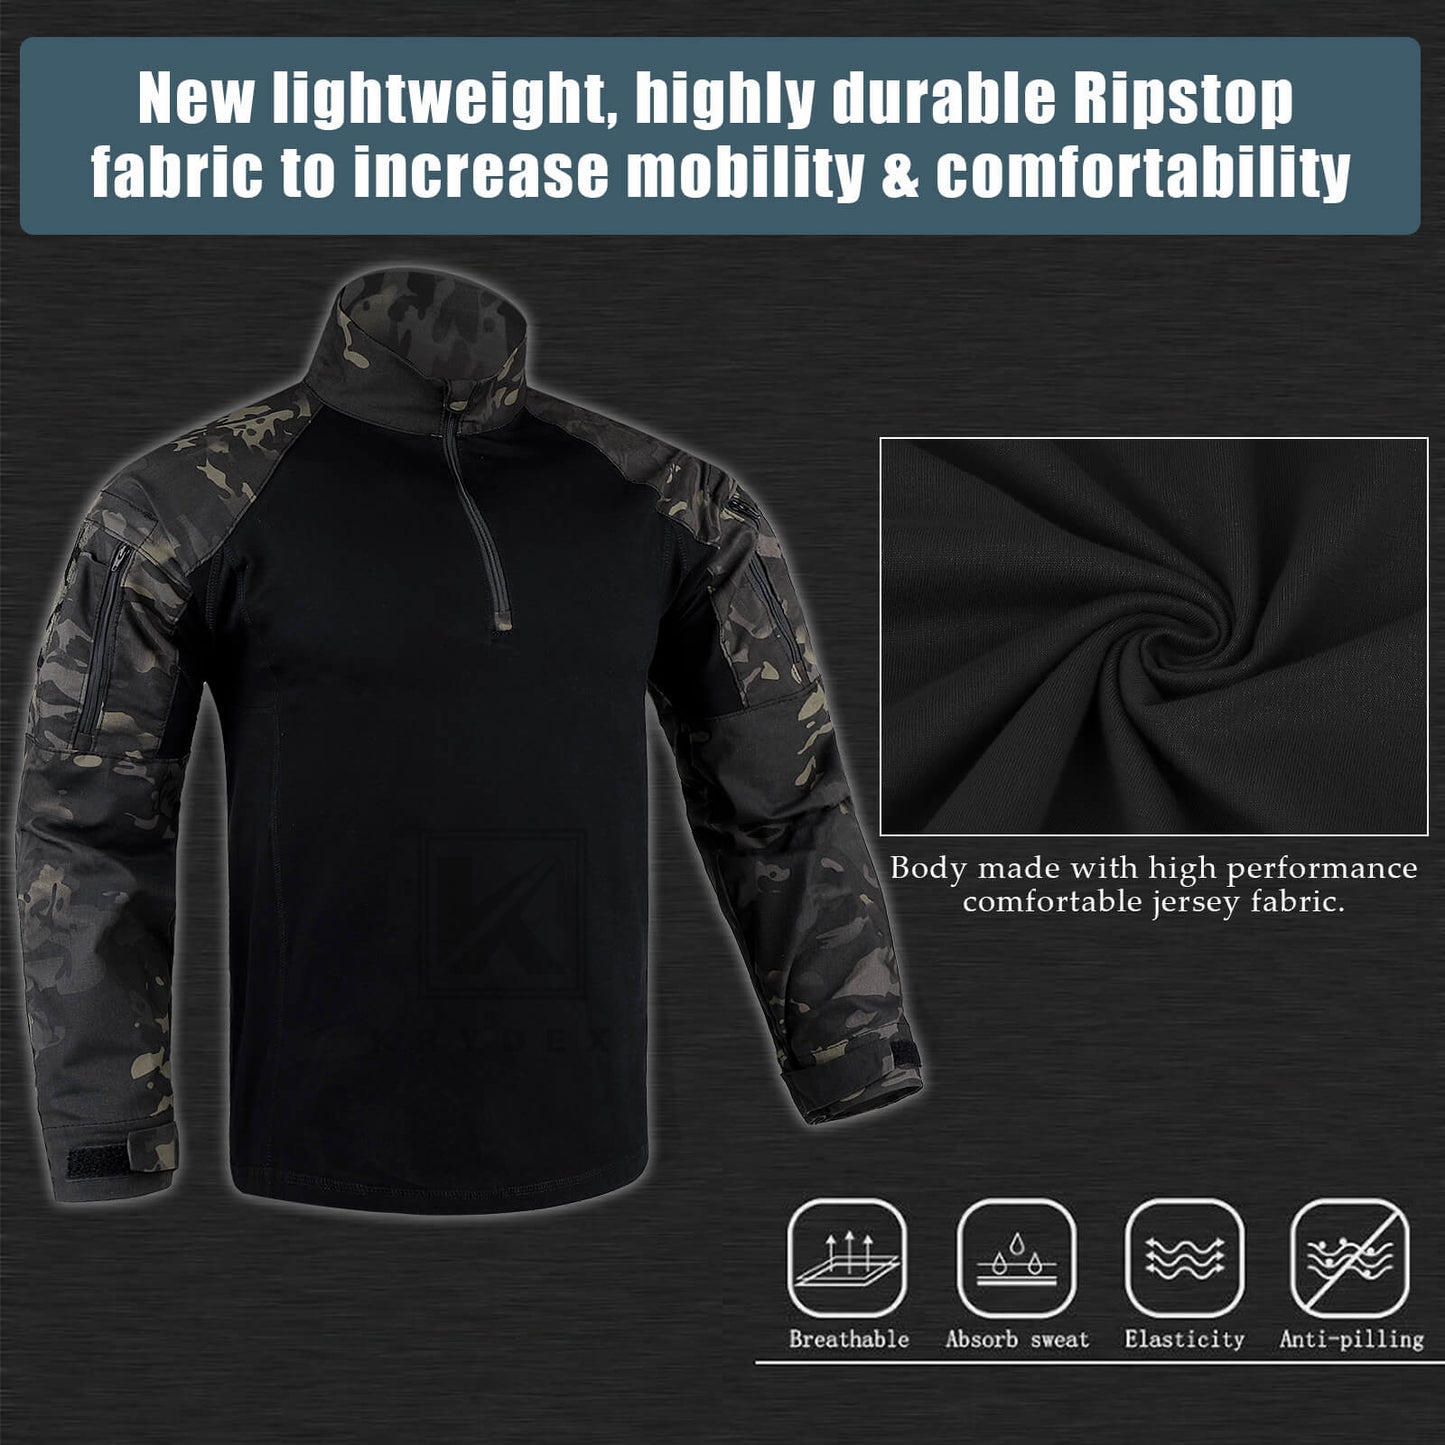 Krydex Tactical Men’s G4 Combat Shirts with Elbow Pads Uniform